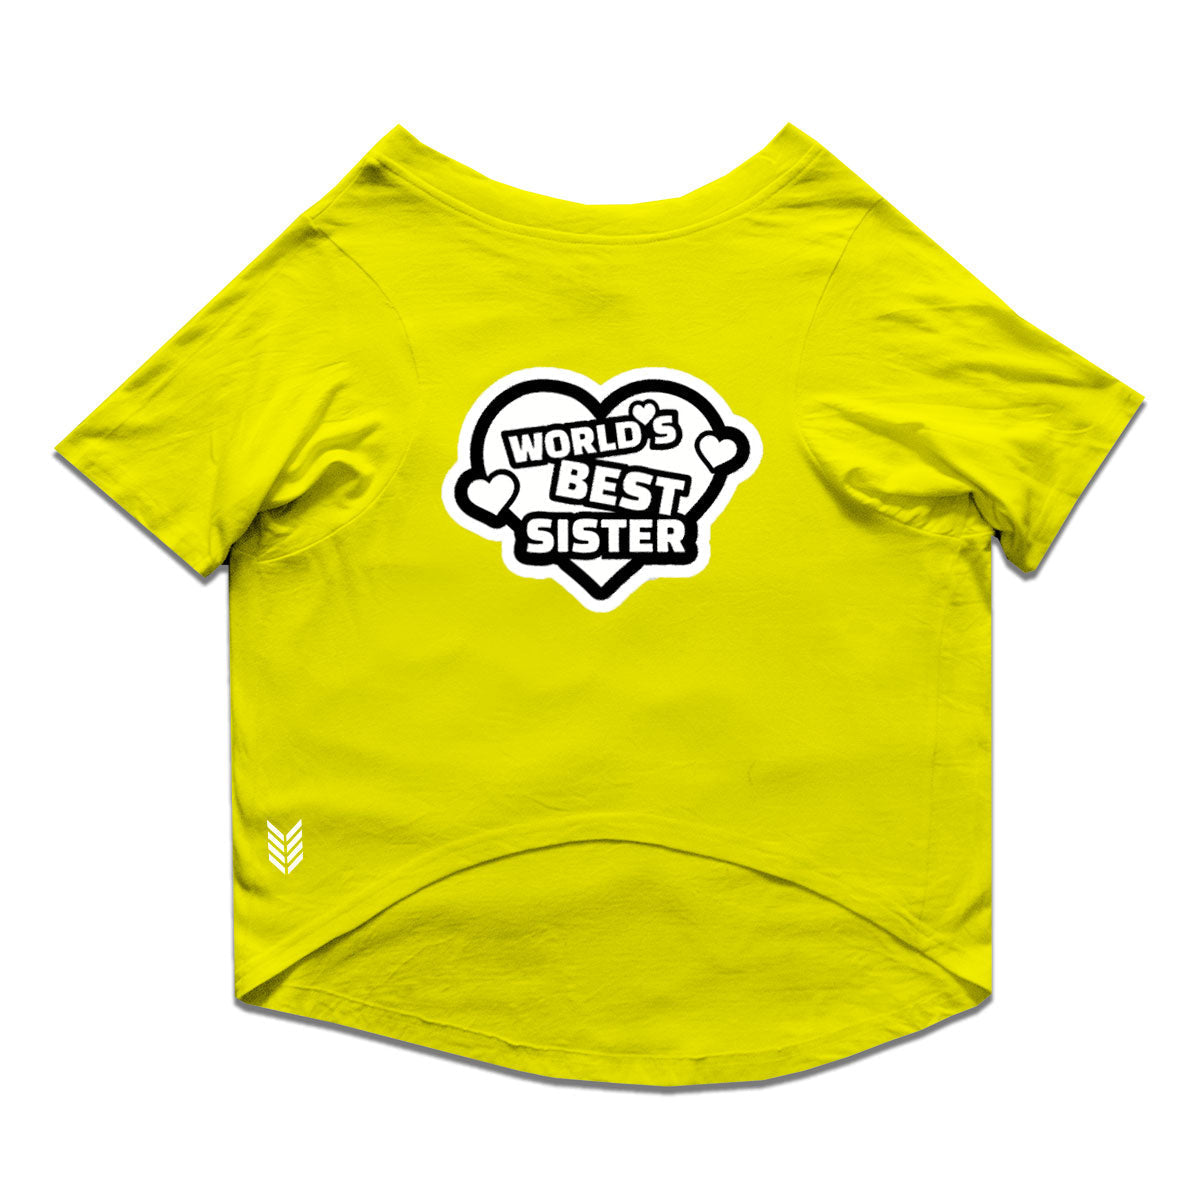 Ruse / Yellow Ruse Basic Crew Neck "World's Best Sister" Printed Half Sleeves Dog Tee11